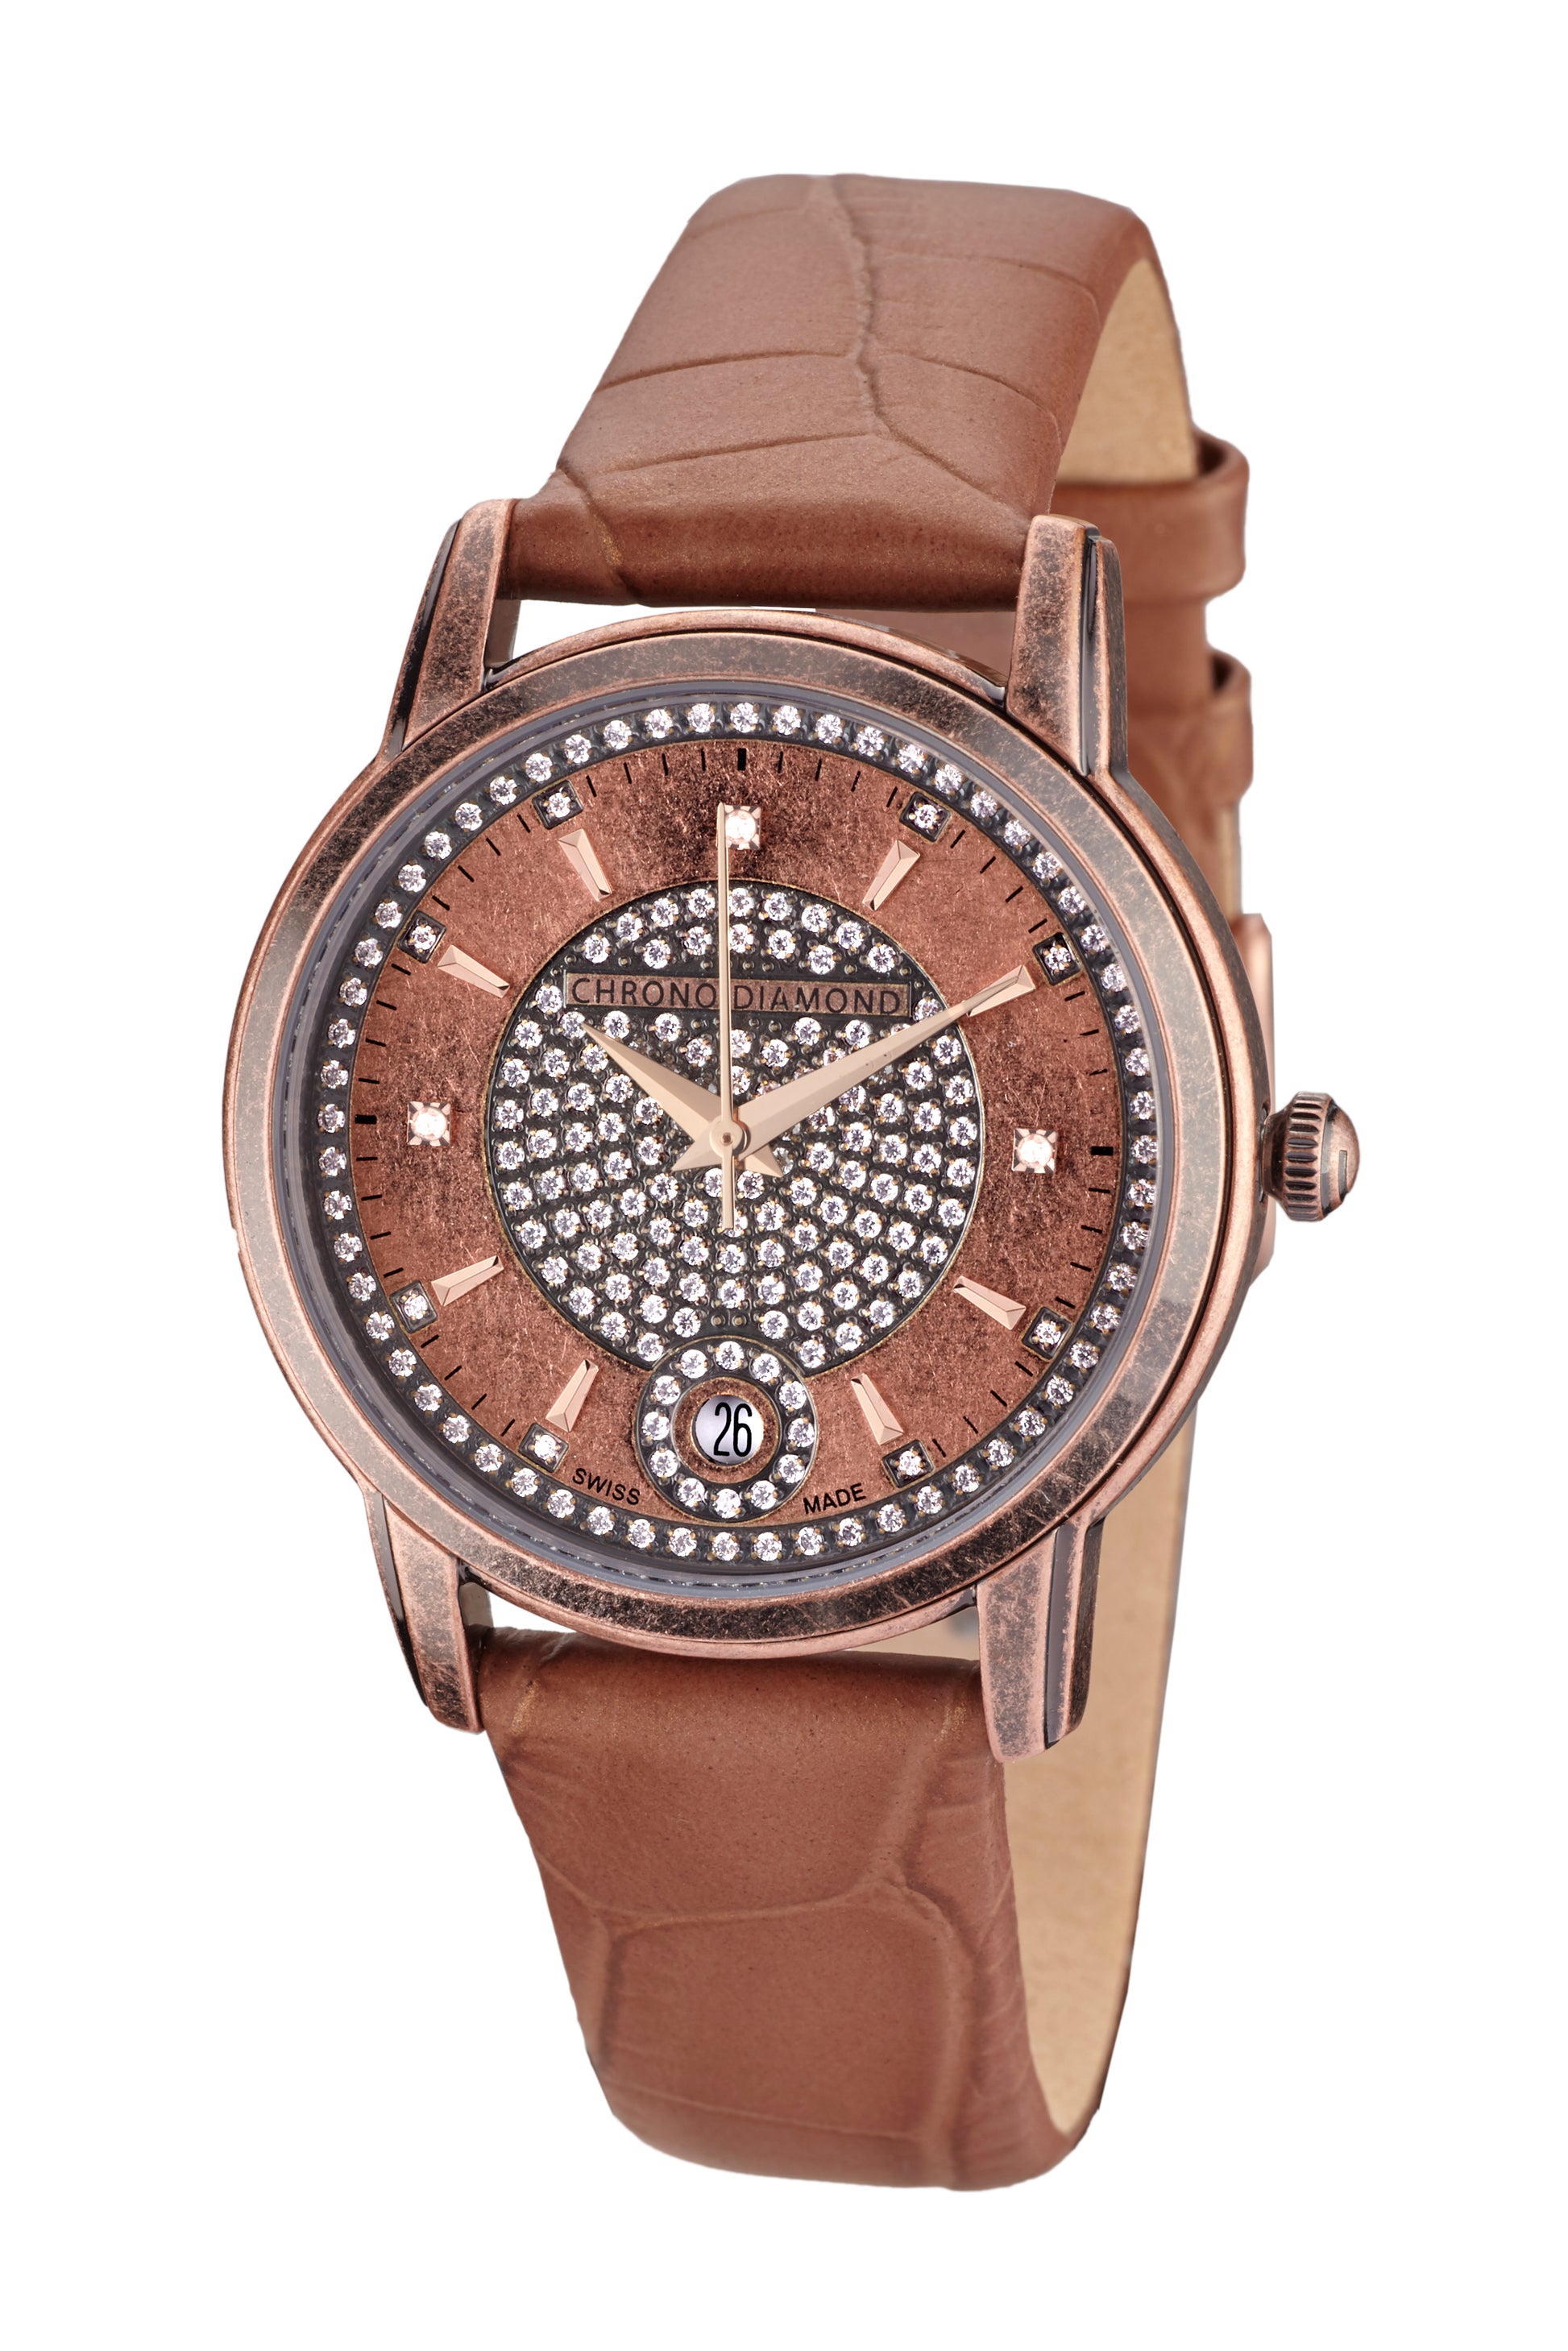 Automatic watches — Nymphe — Chrono Diamond — antique rosegold rose